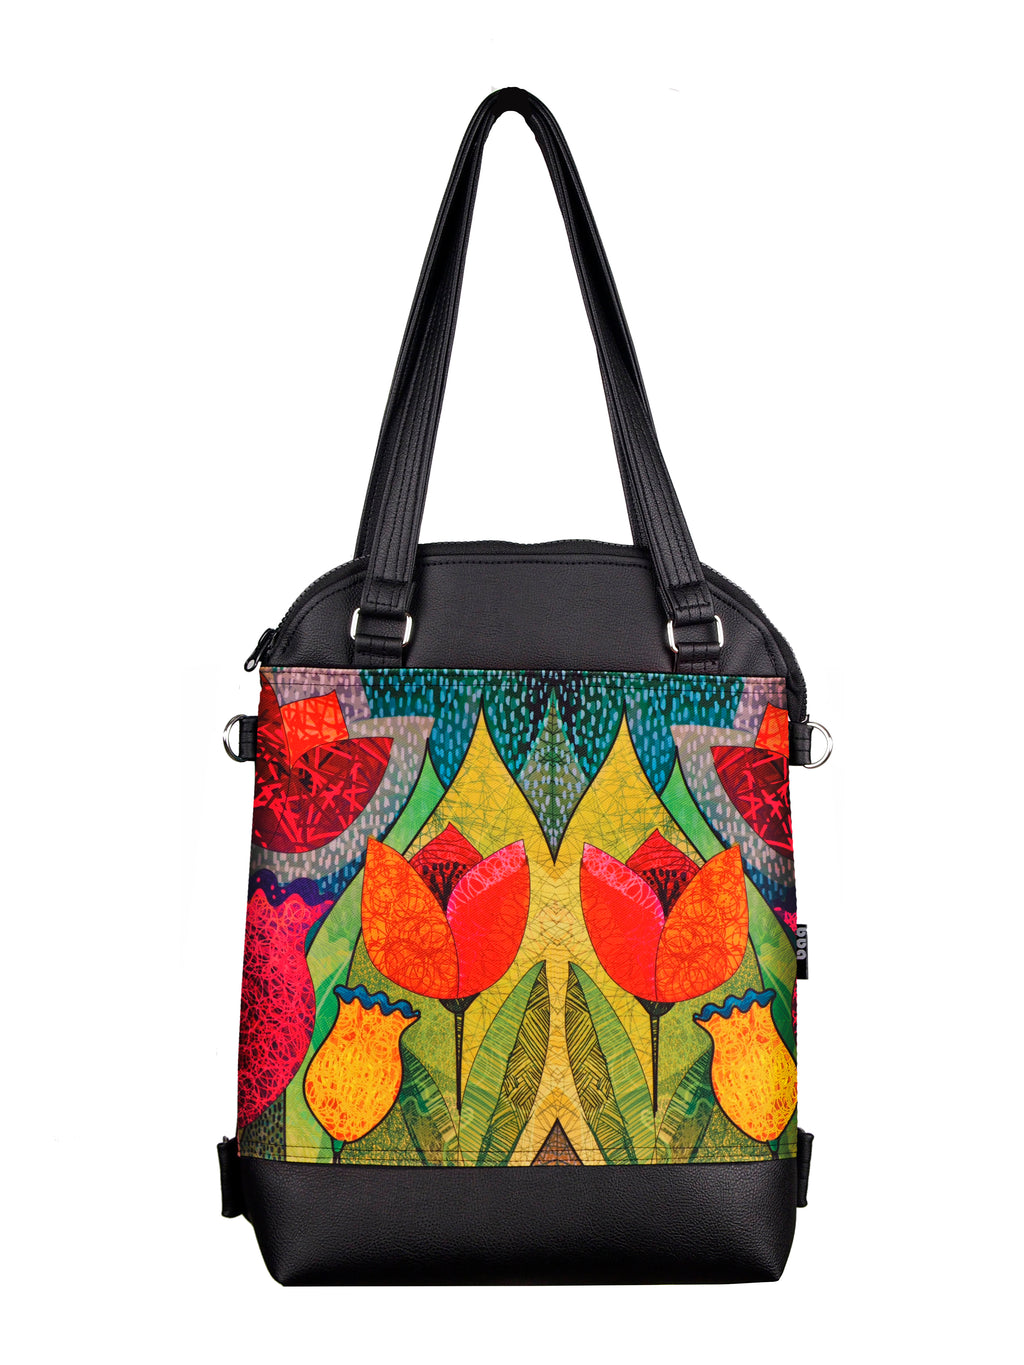 Bardo classic bag&backpack - Fairy garden